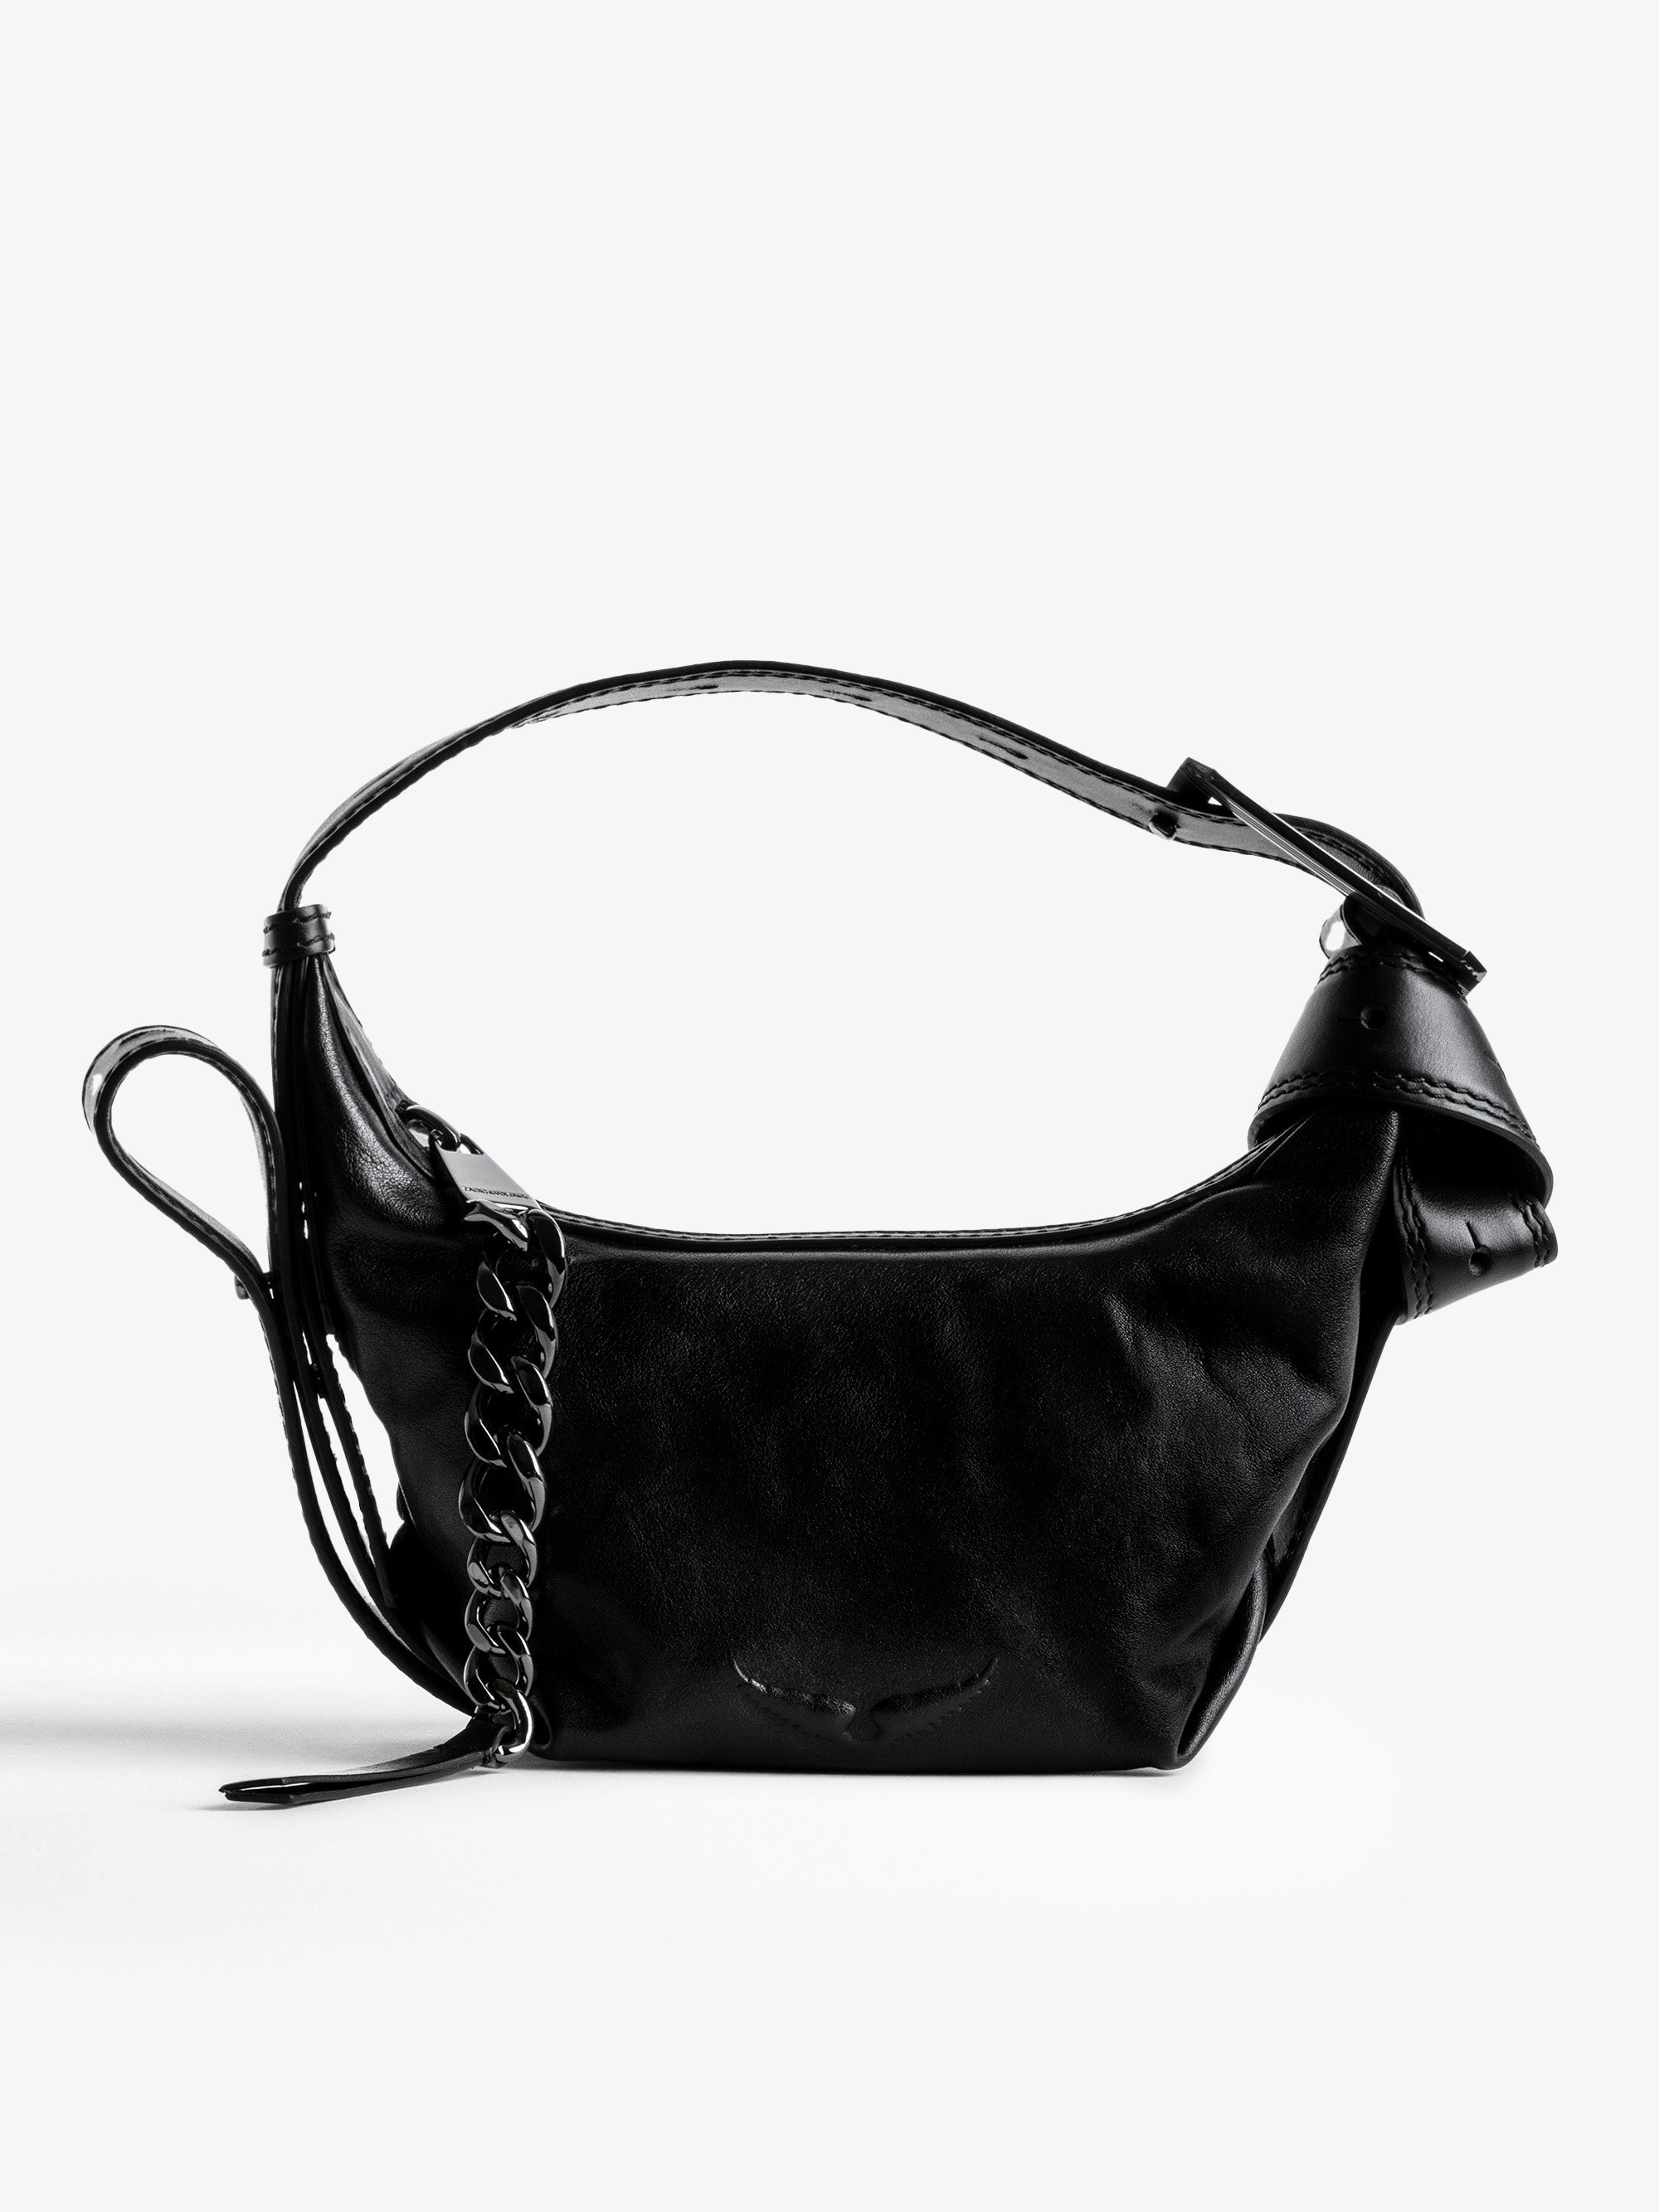 Le Cecilia XS Bag - Le Cecilia XS bag in black vegetable tanned leather.